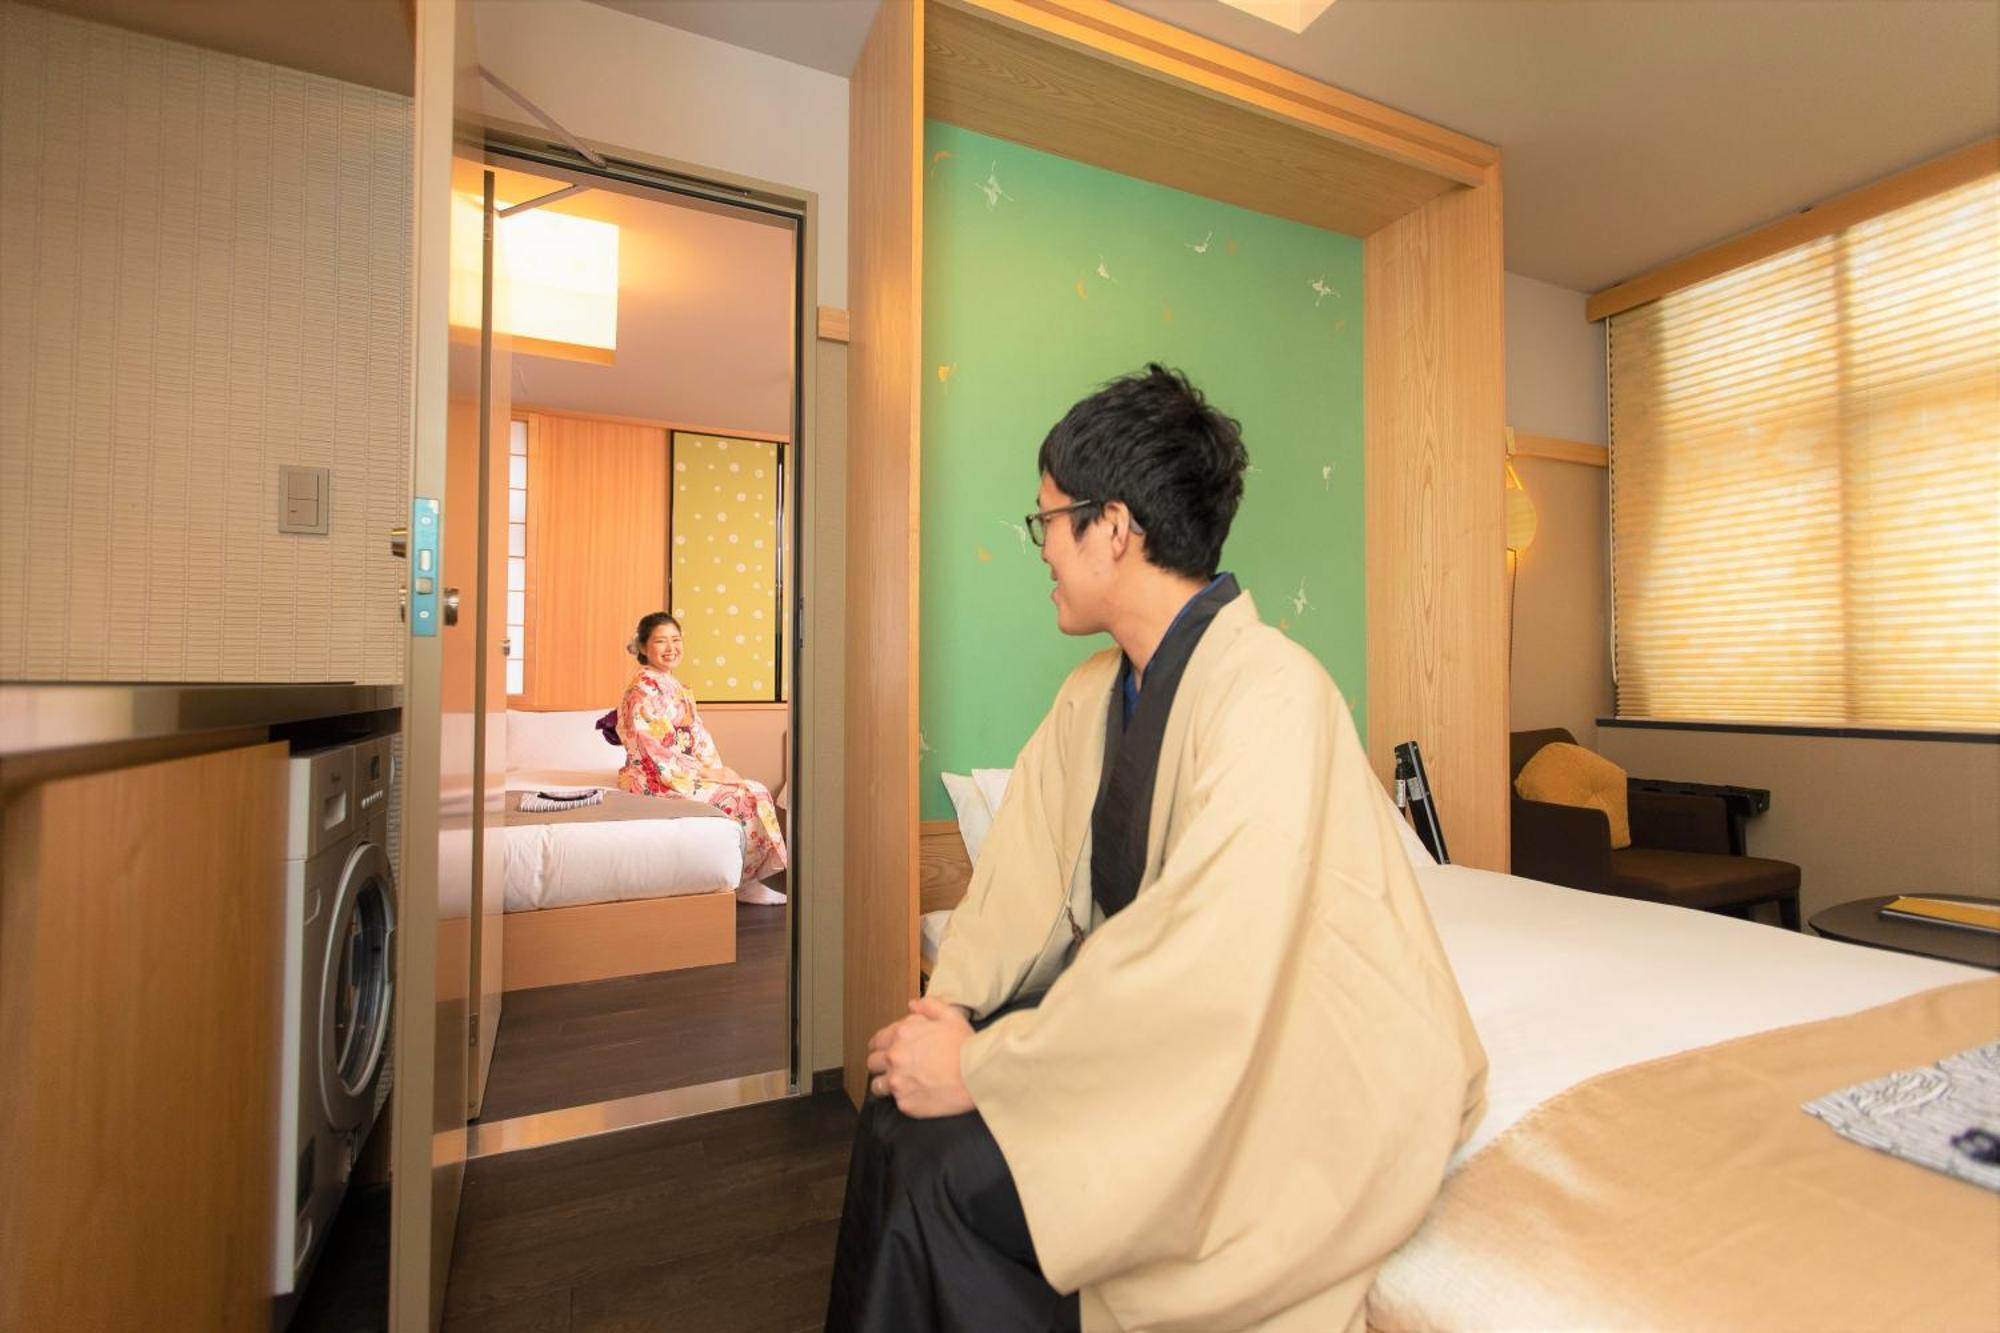 Gozan Hotel & Serviced Apartment Higashiyama Sanjo Kyoto Buitenkant foto